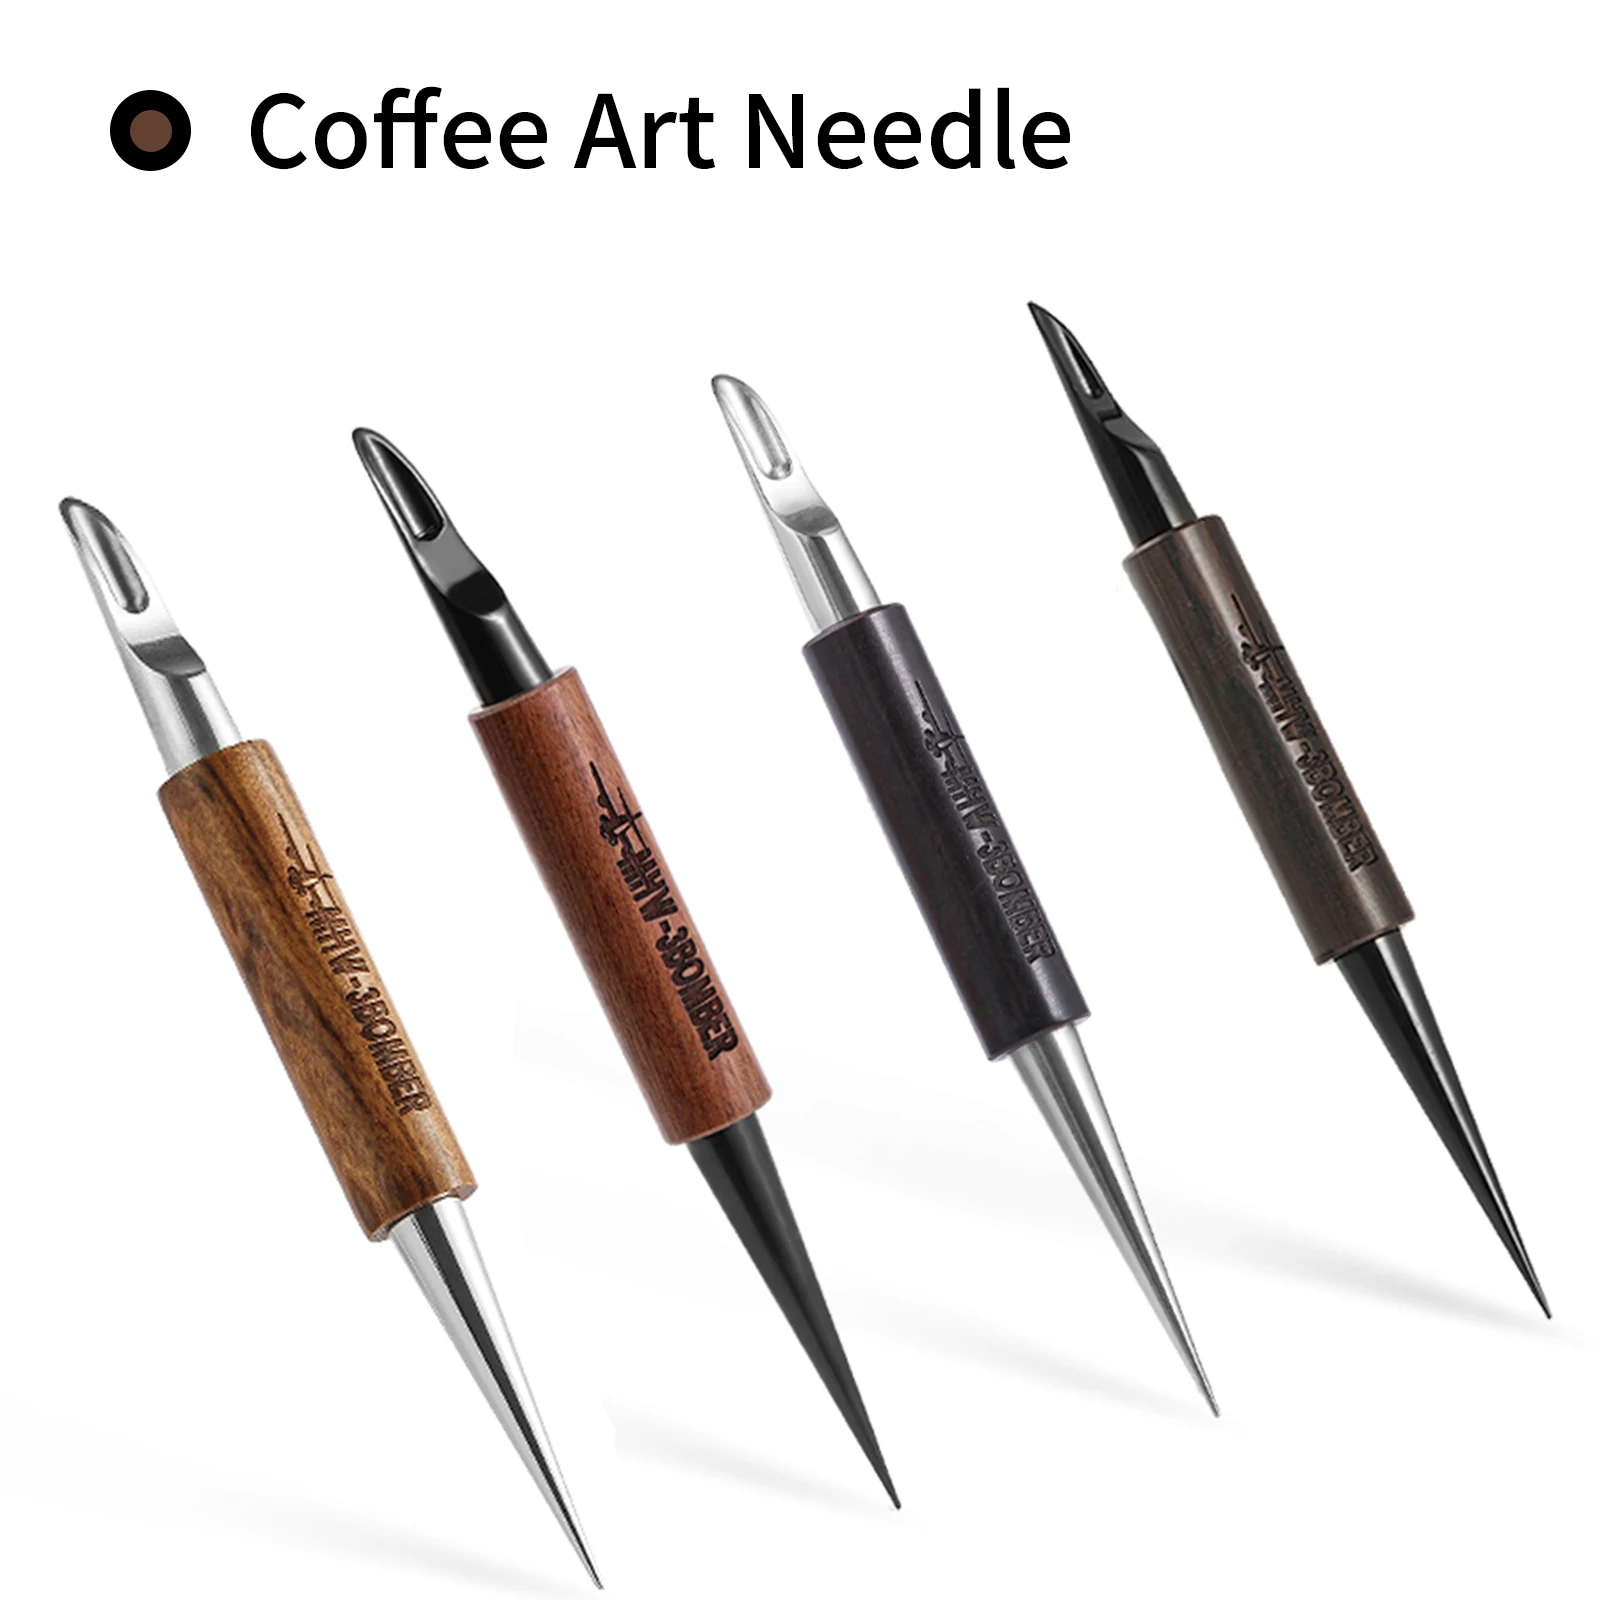 MHW-3BOMBER Coffee Art Pen for Latte Vintage Espresso Art Needles Home Barista Tool Chic Cappuccino Decoration Accessories 4pcs